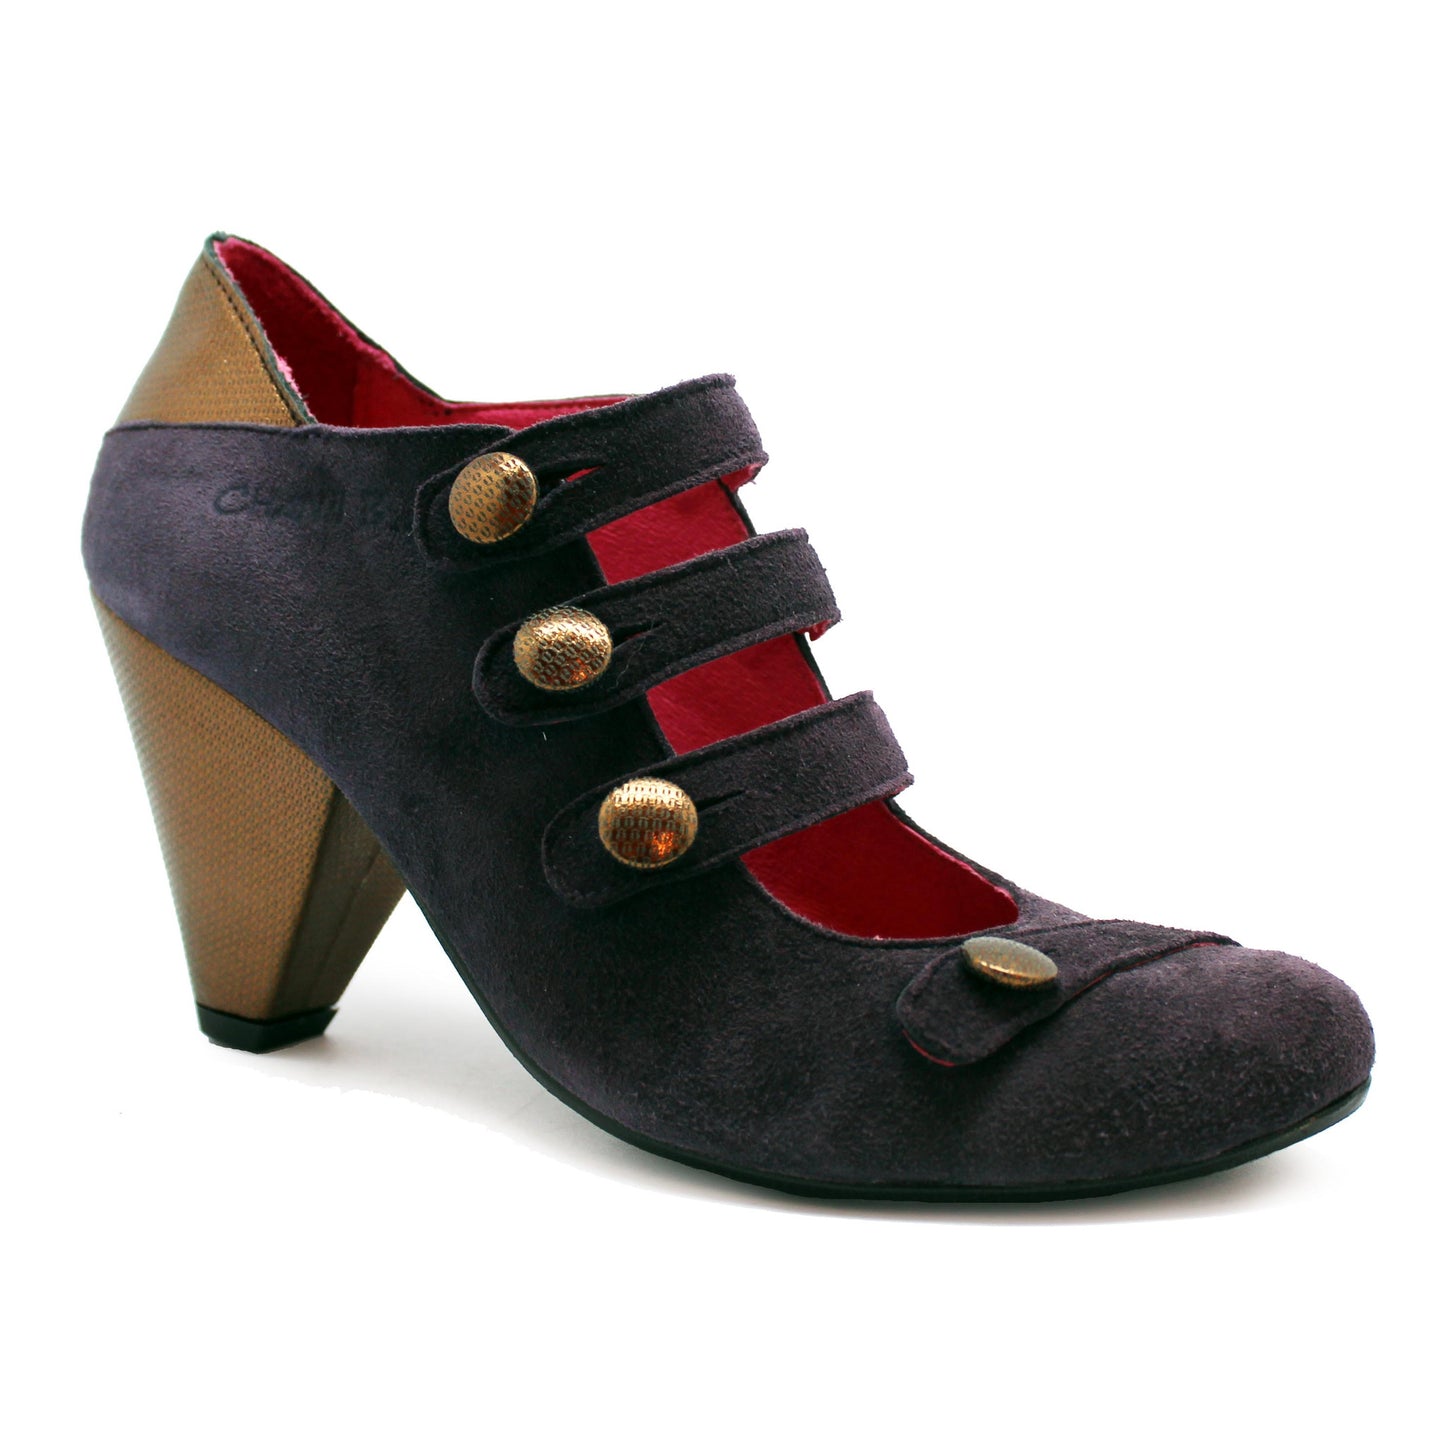 Voila - Purple/Bronze shoe with buttons last pairs 35 & 40!